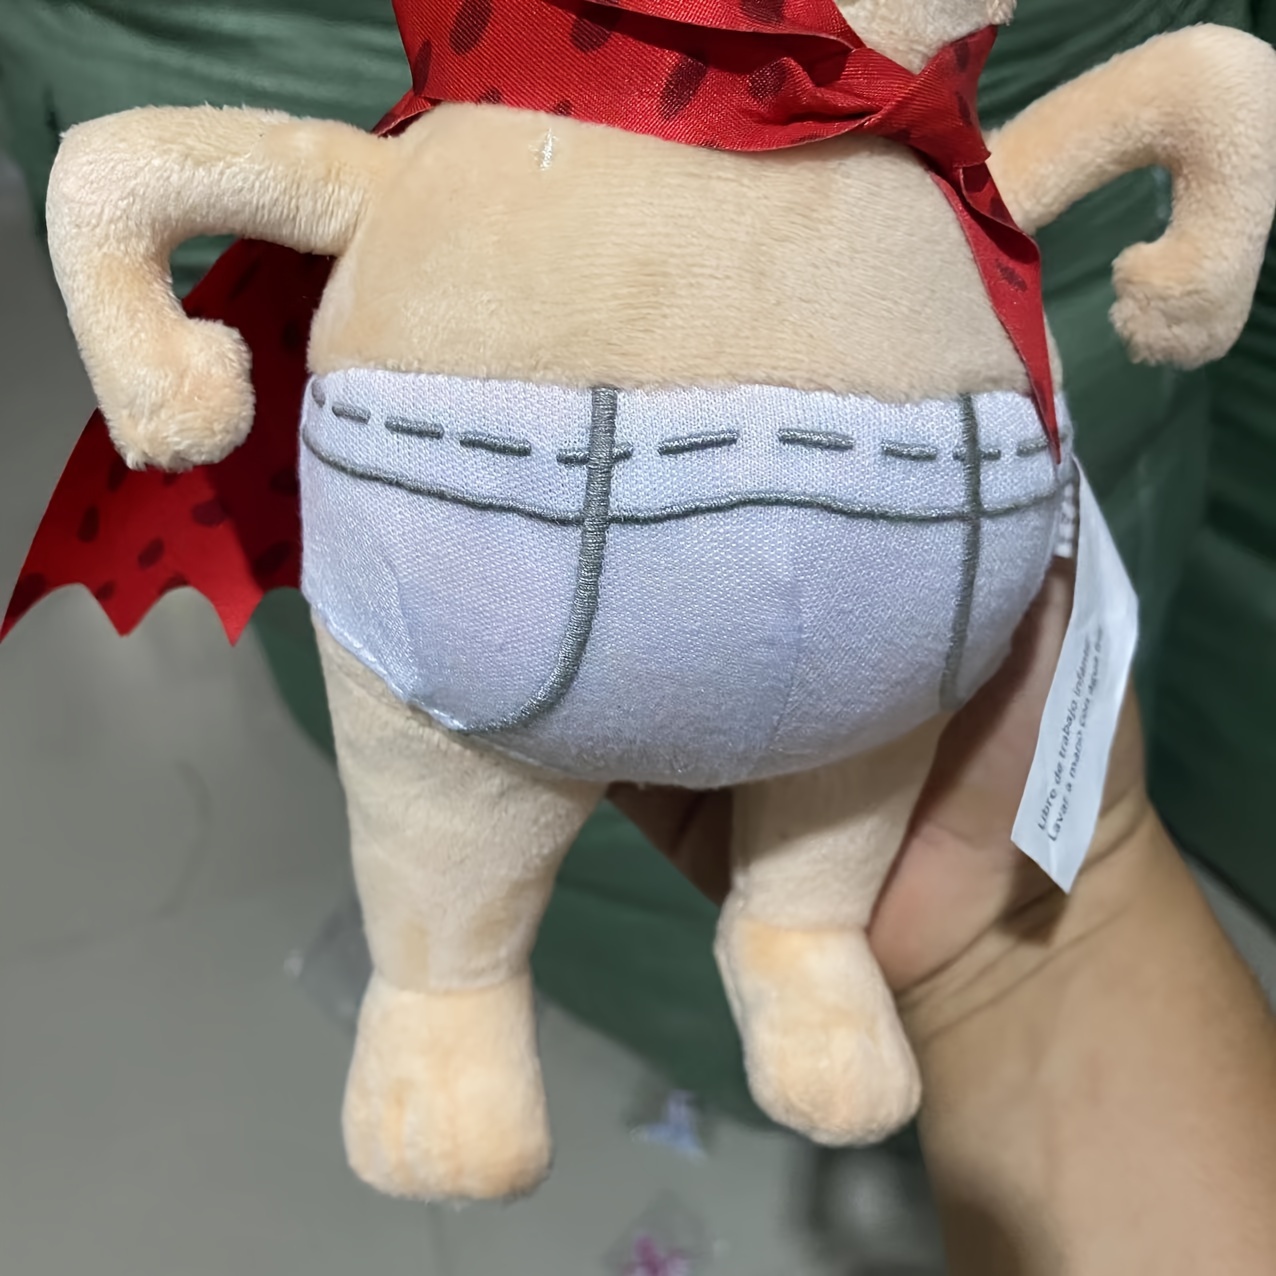 Captain Underpants Plush Doll Figure Stuffed Animal Soft Toy 8